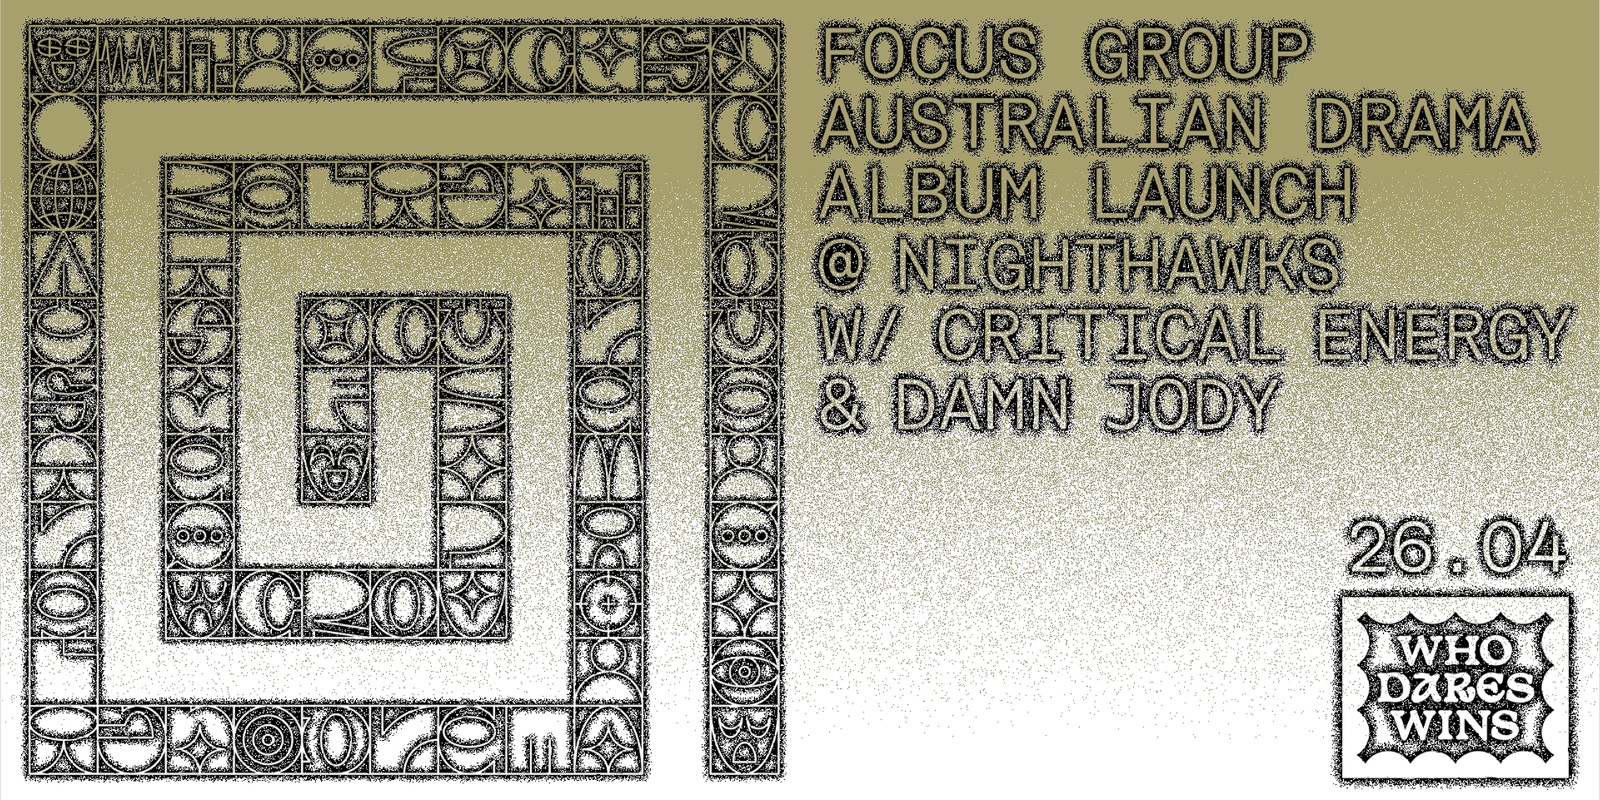 Banner image for Focus Group "Australian Drama" Album Launch w/ Critical Energy + Damn Jody